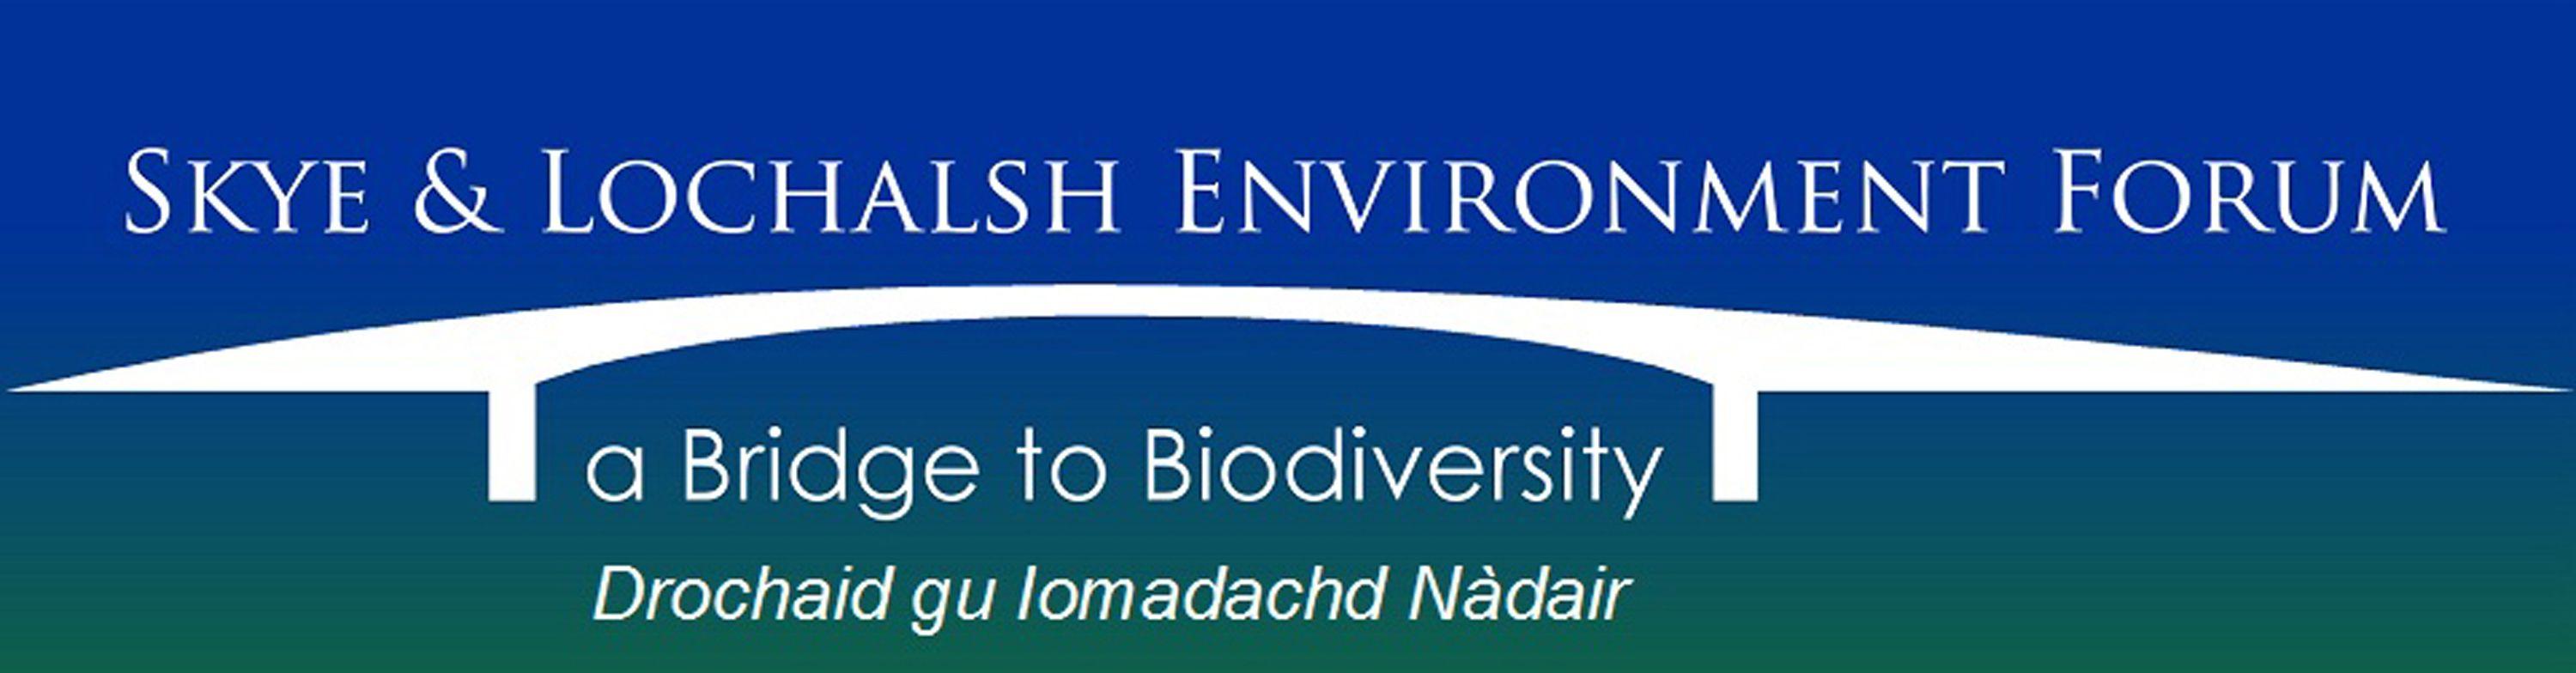 Blue Green and White Logo - Skye and Lochalsh Environment Forum - SLEF Logos